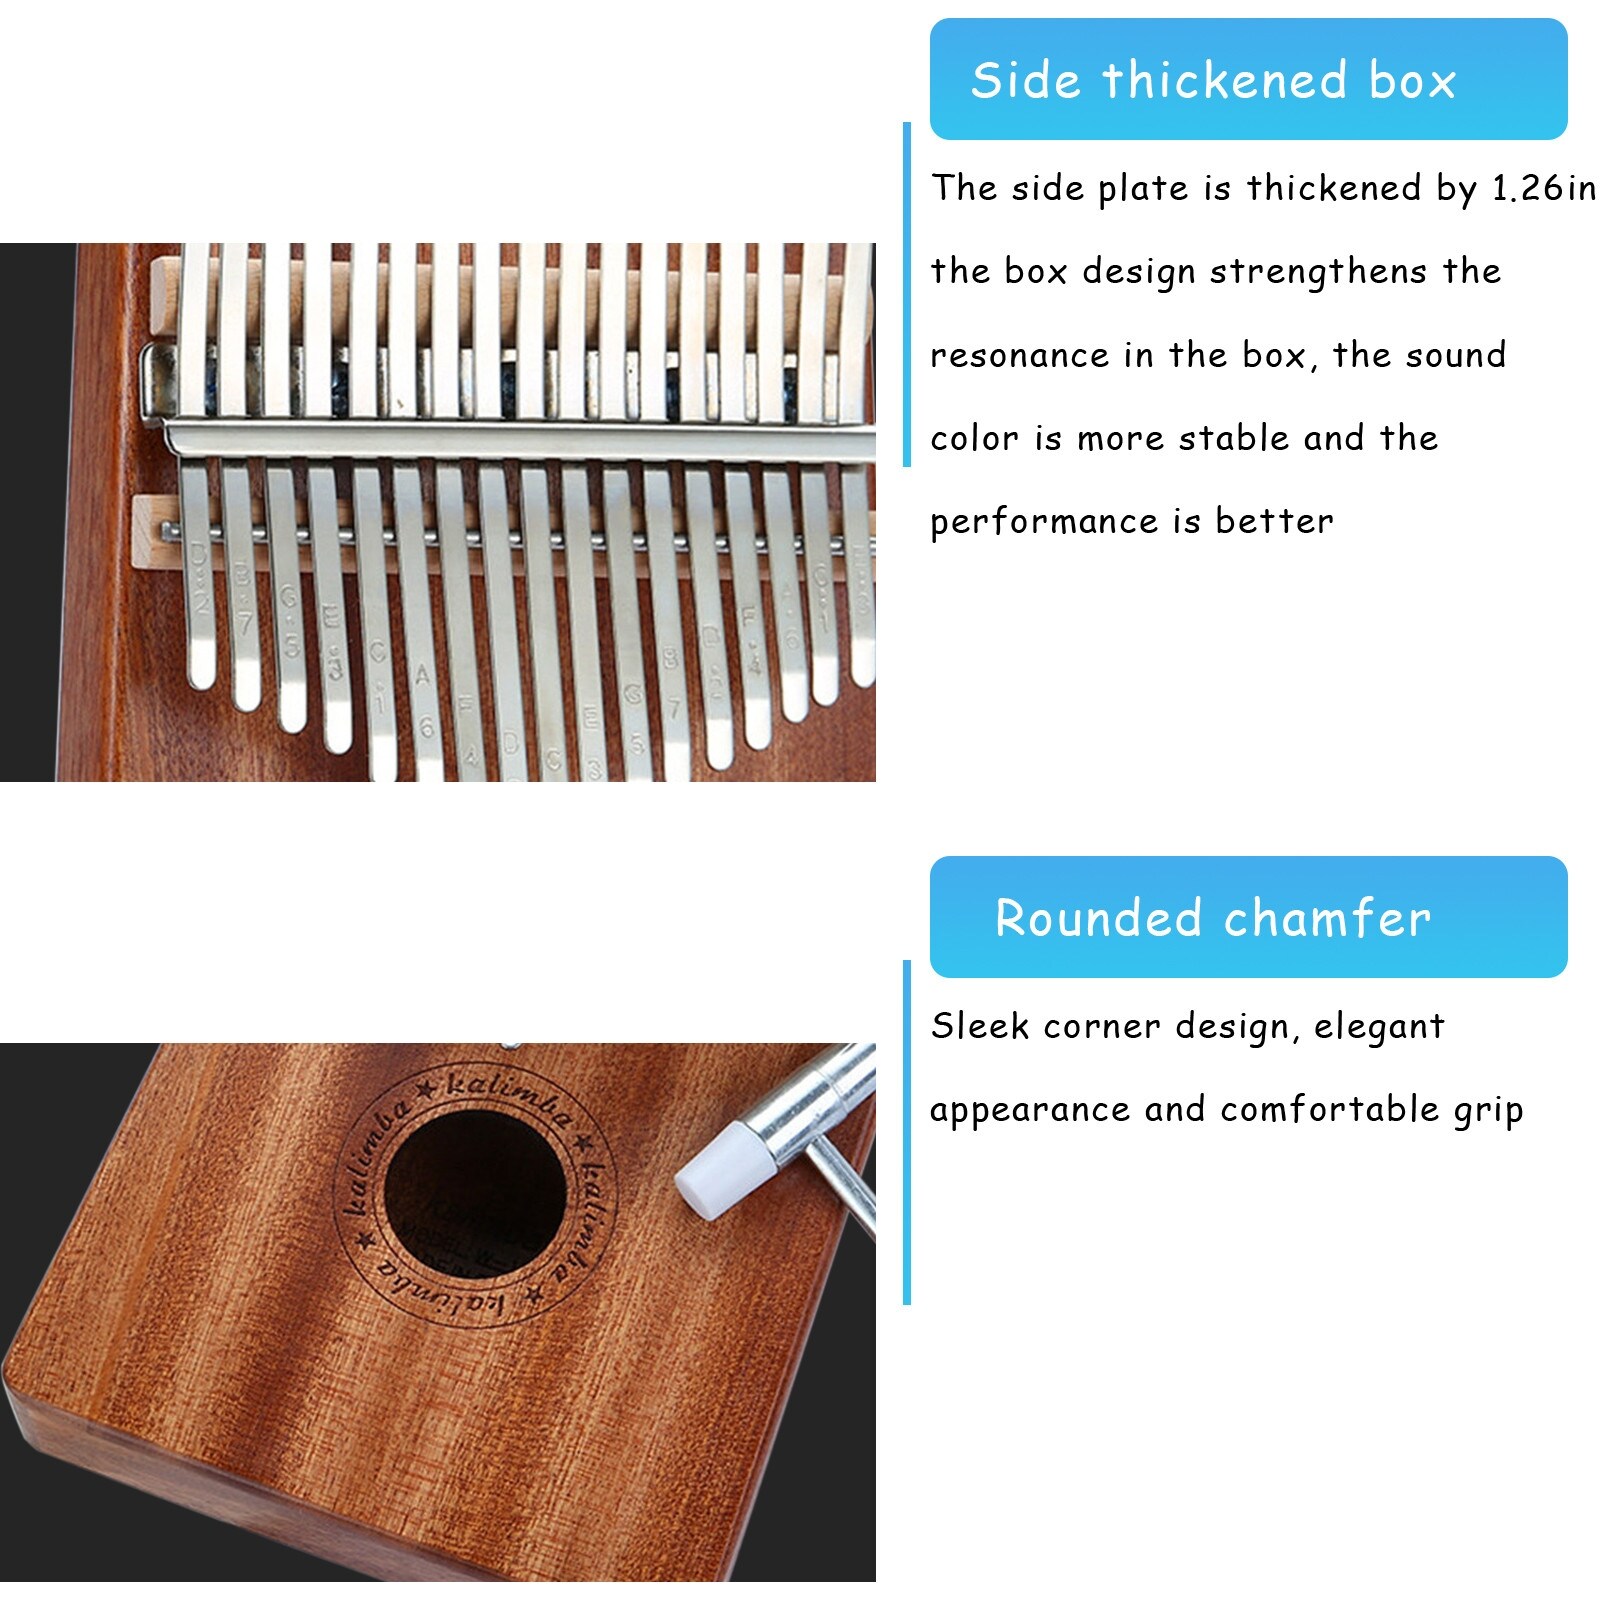 17 Key Kalimba Finger Mbira Mahogany Keyboard Music Instrument Wood Thumb  Piano